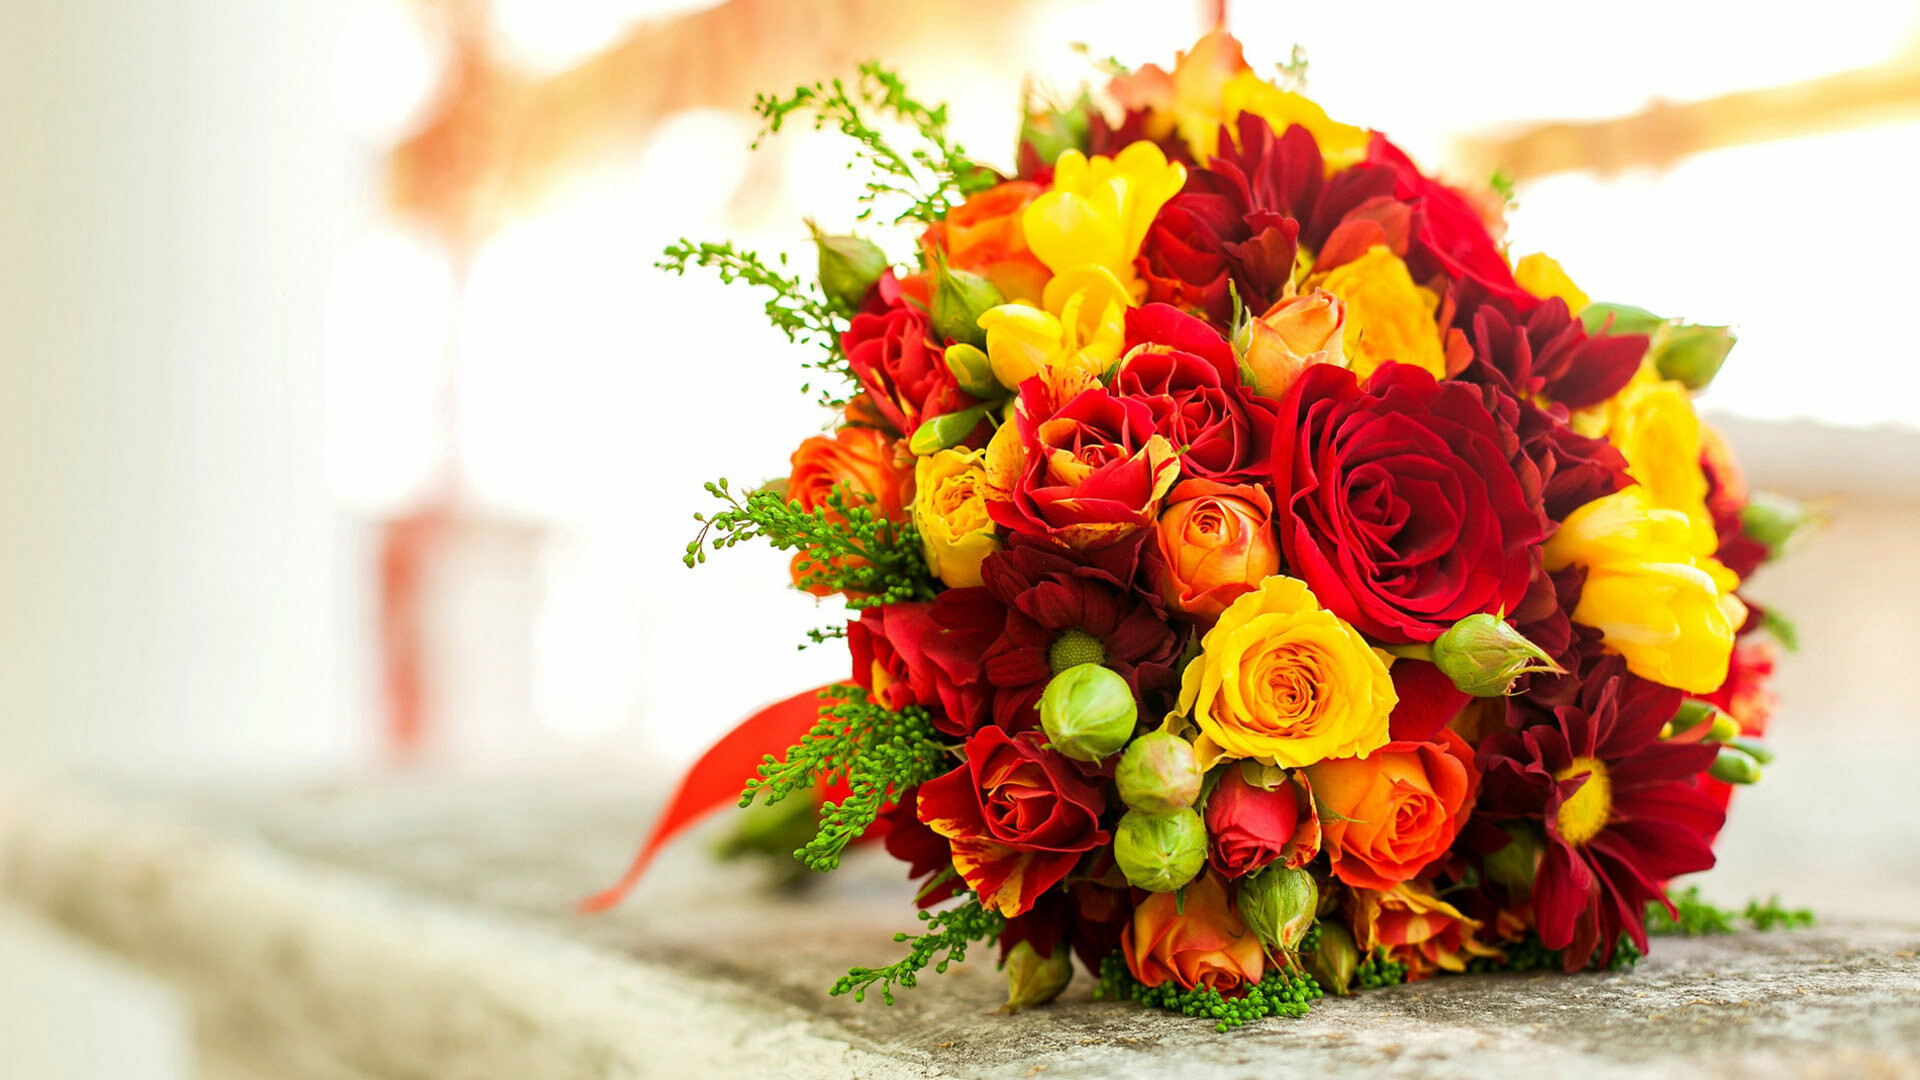 Flower Bouquet: Wedding ceremony supply, Cut flowers. 1920x1080 Full HD Background.